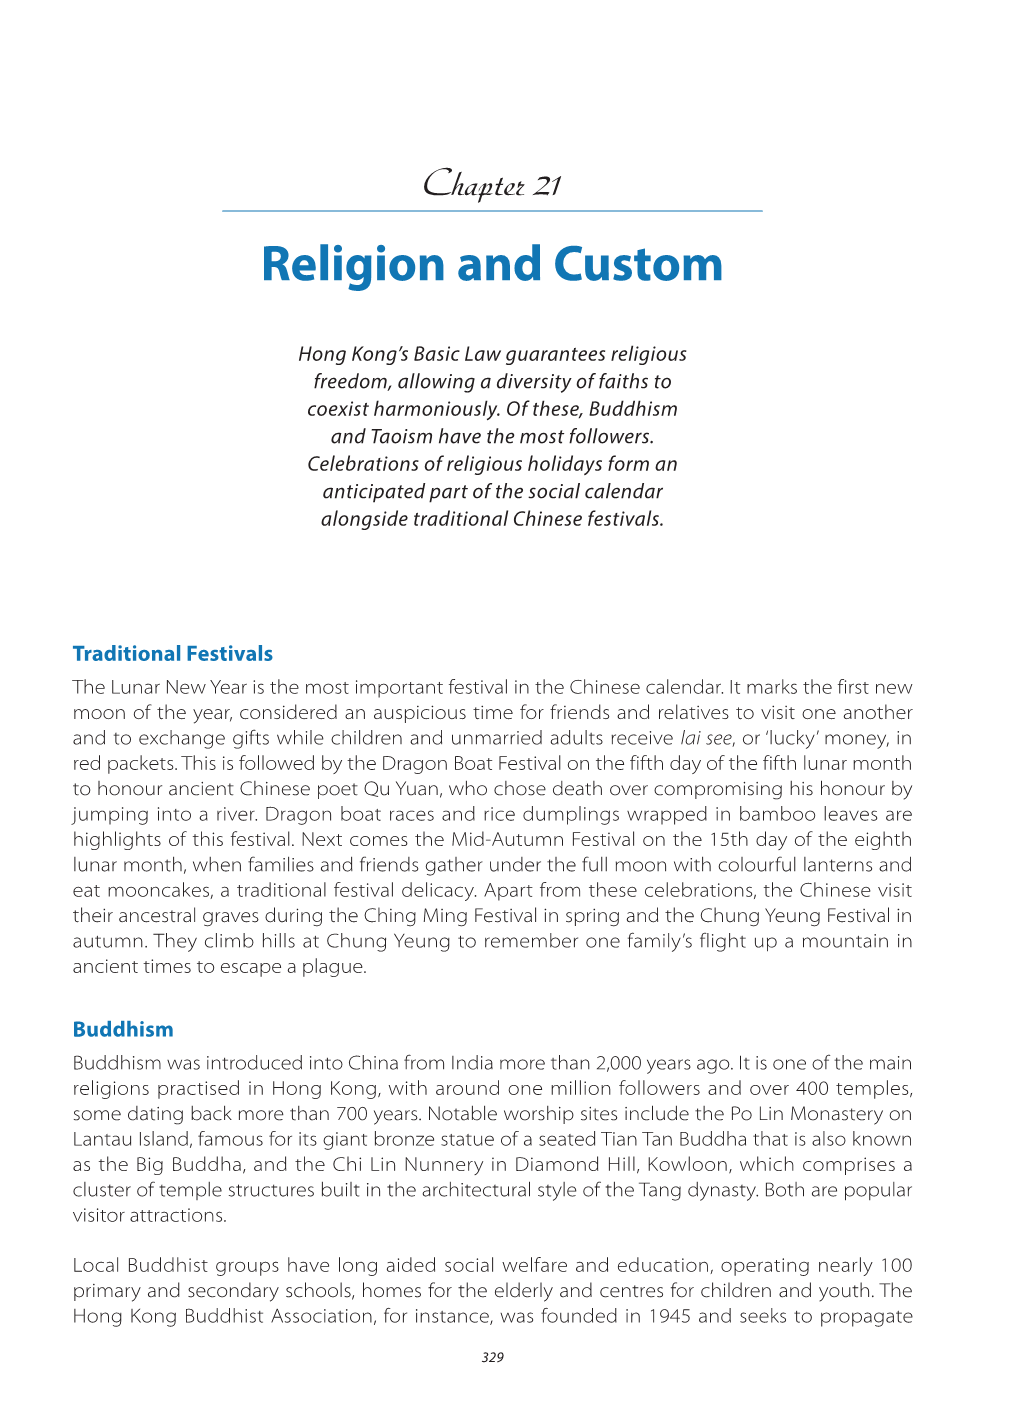 Religion and Custom